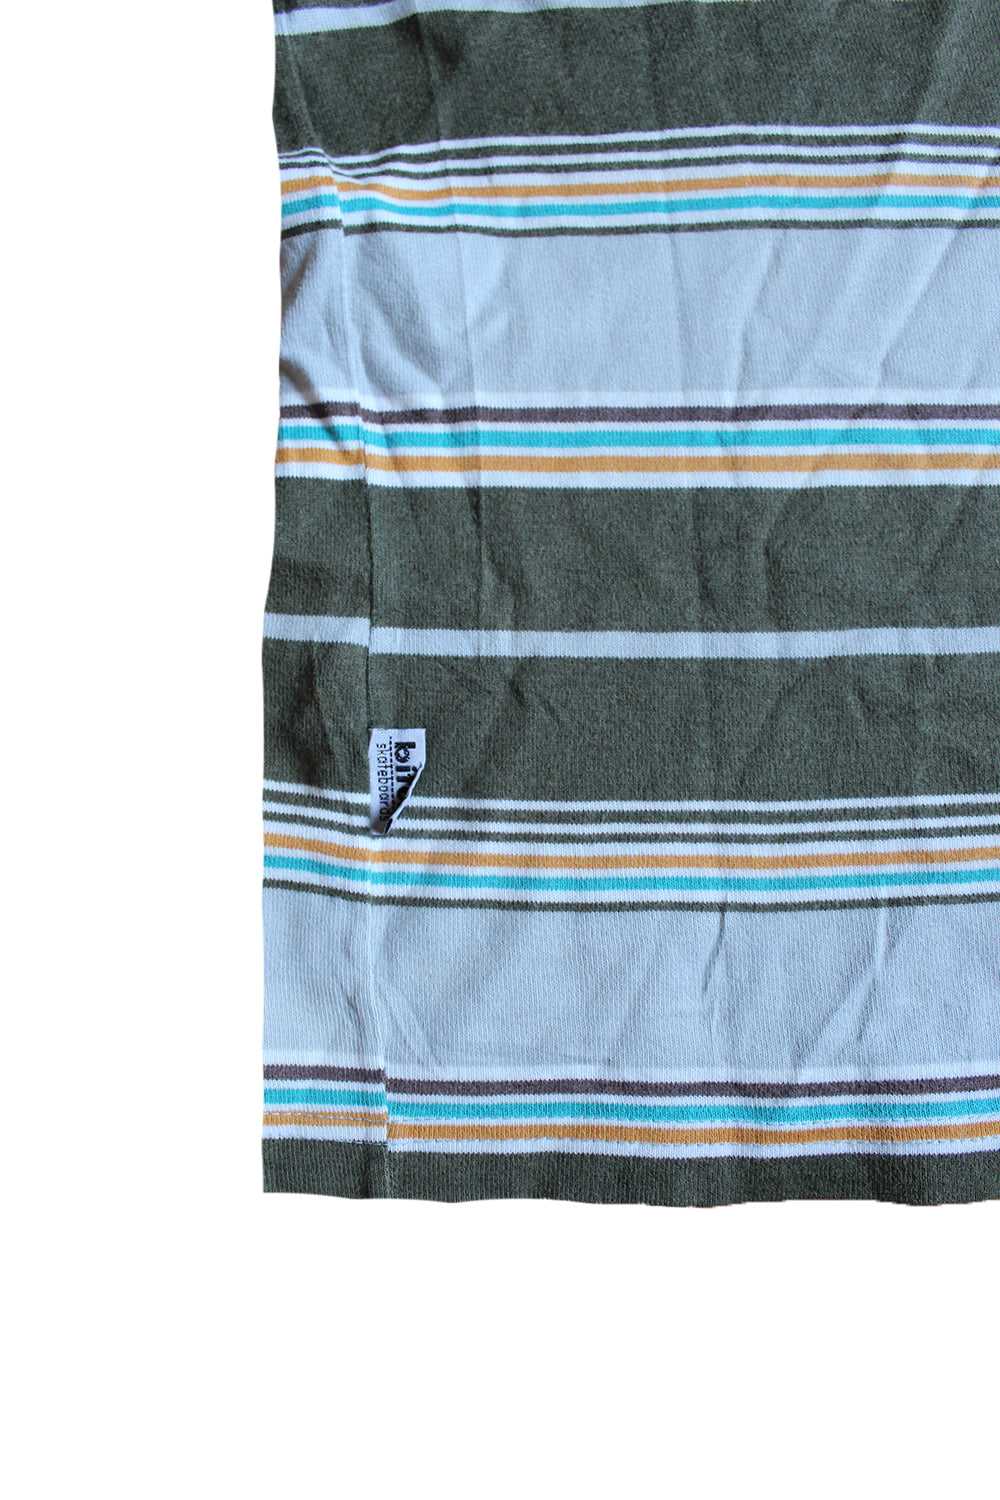 Vintage 90's BITCH Skateboards Striped T-shirt - image 3